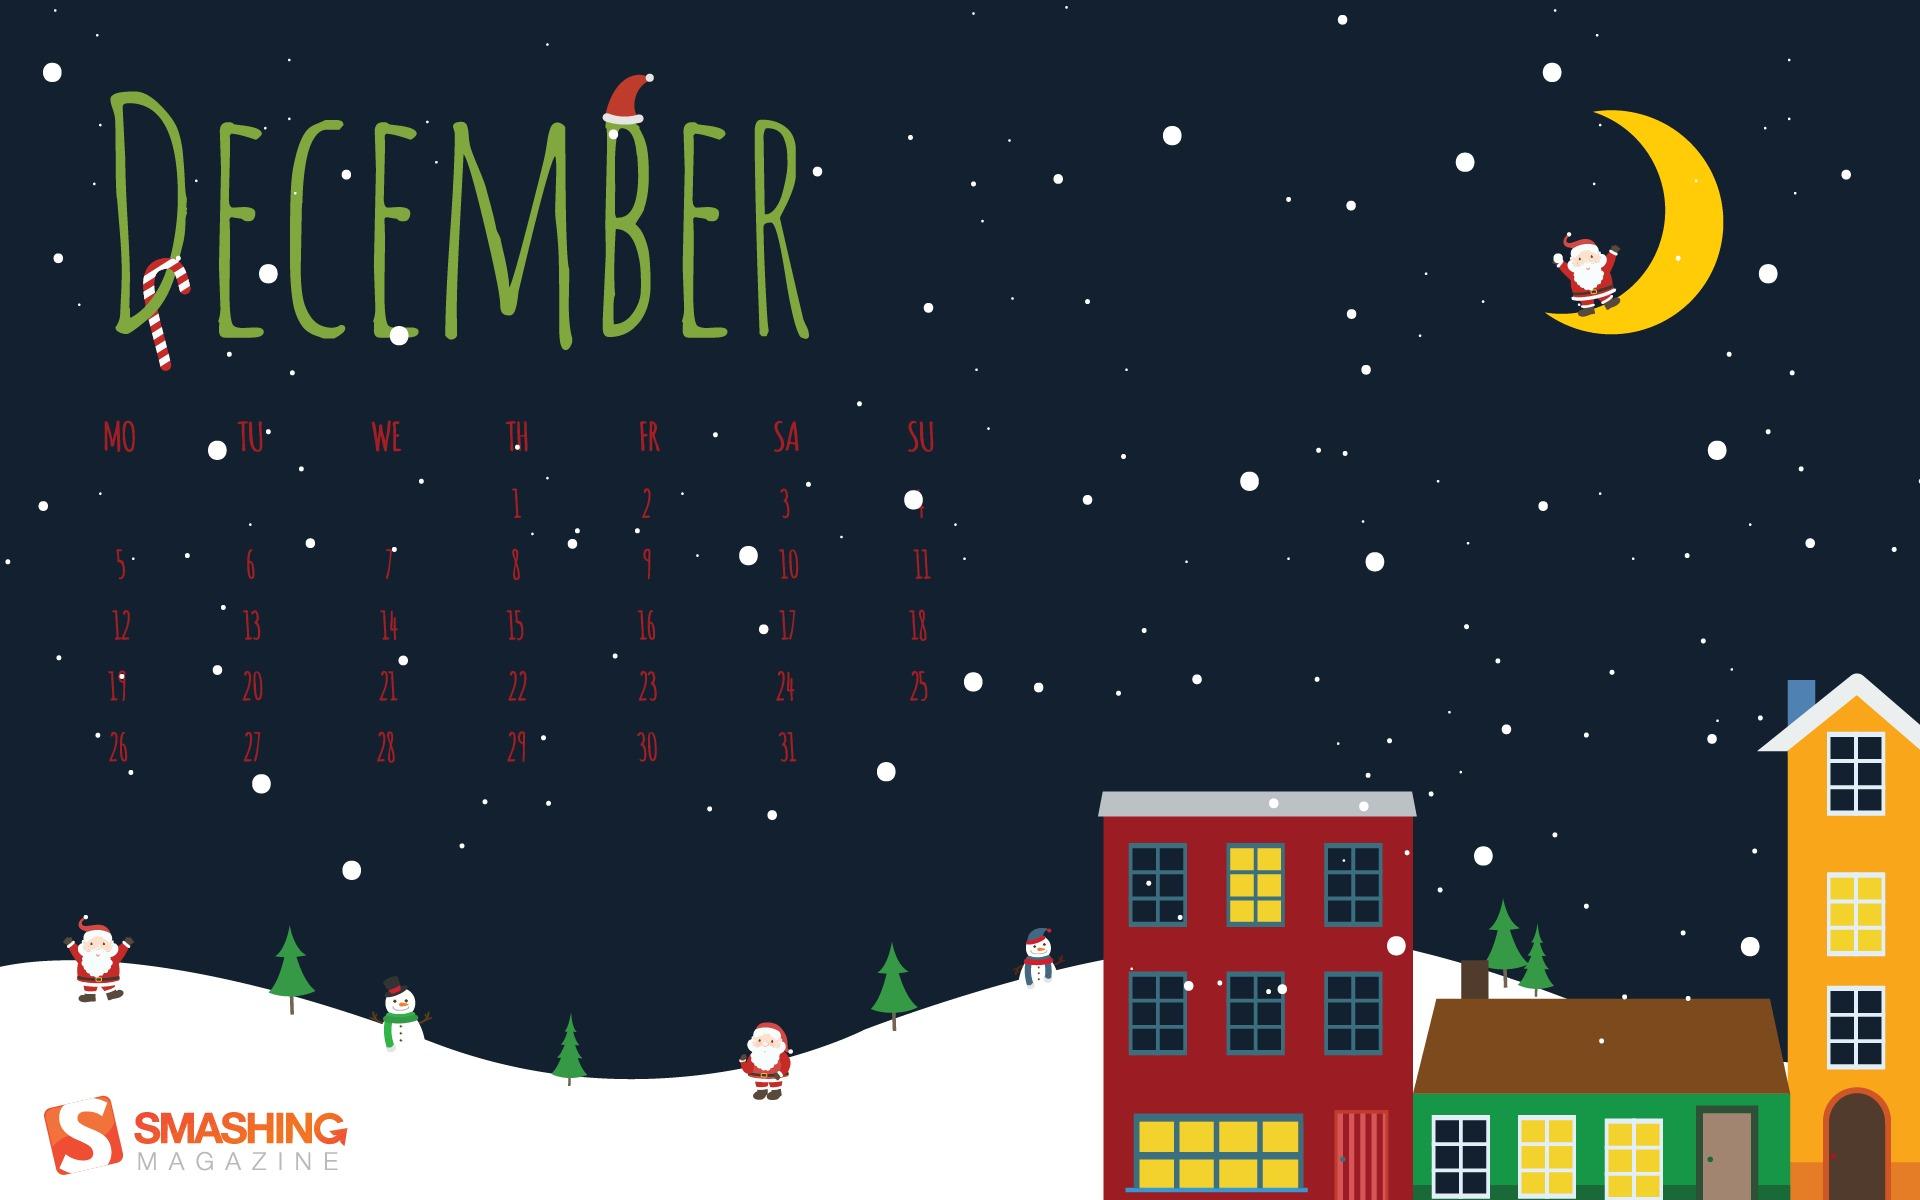 December 2016 Christmas theme calendar wallpaper (1)